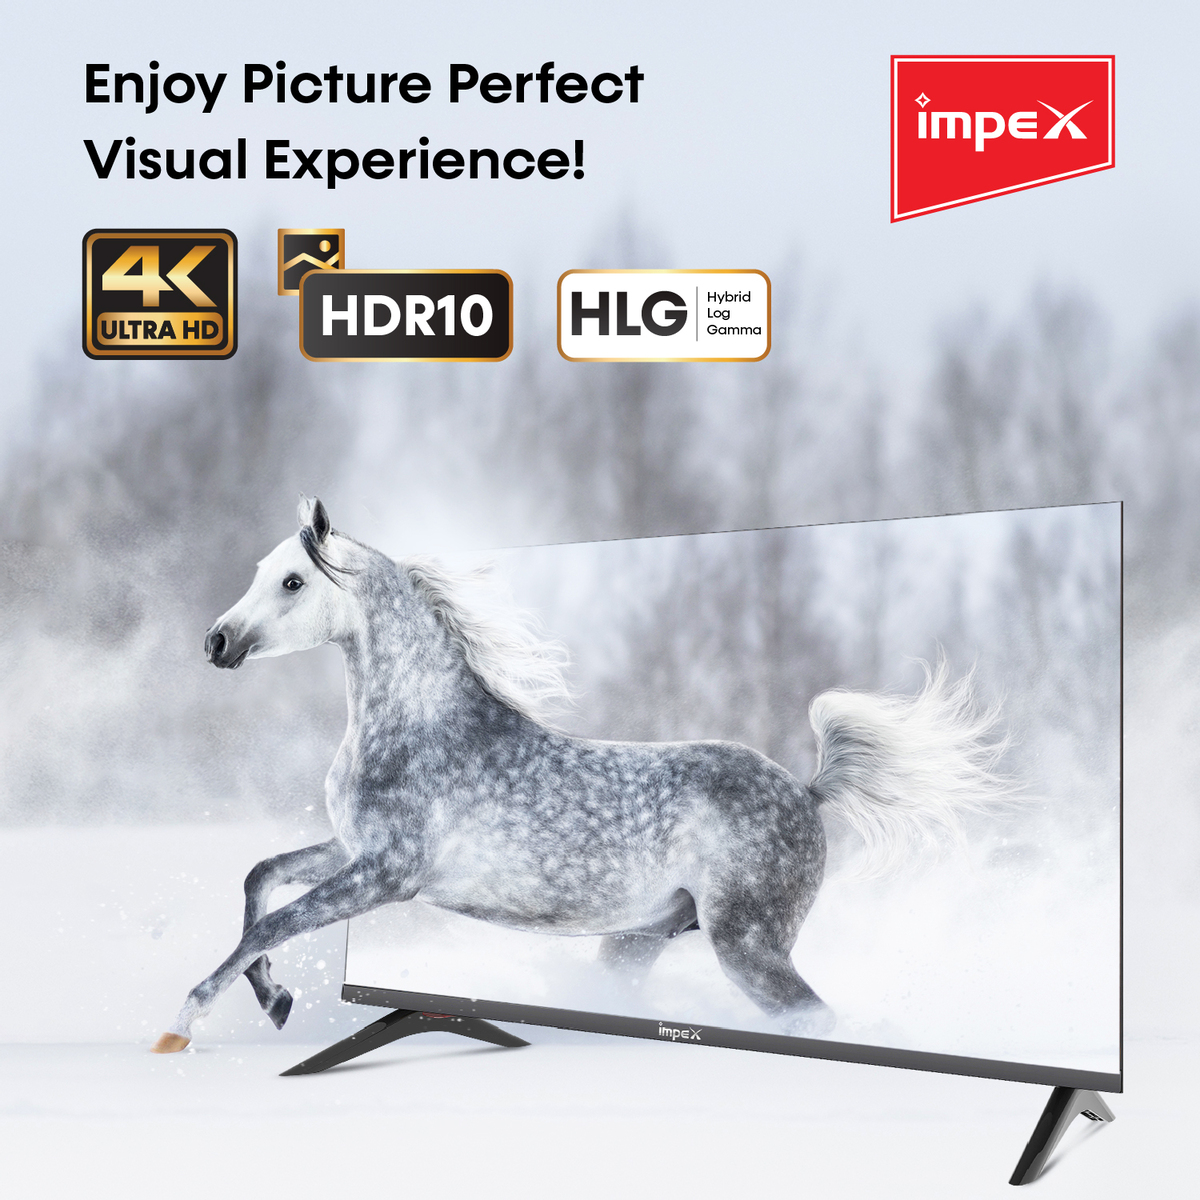 Impex 65 Inch 4K Ultra HD VIDA OS Smart LED TV - PLATINA 65 UHD SMART